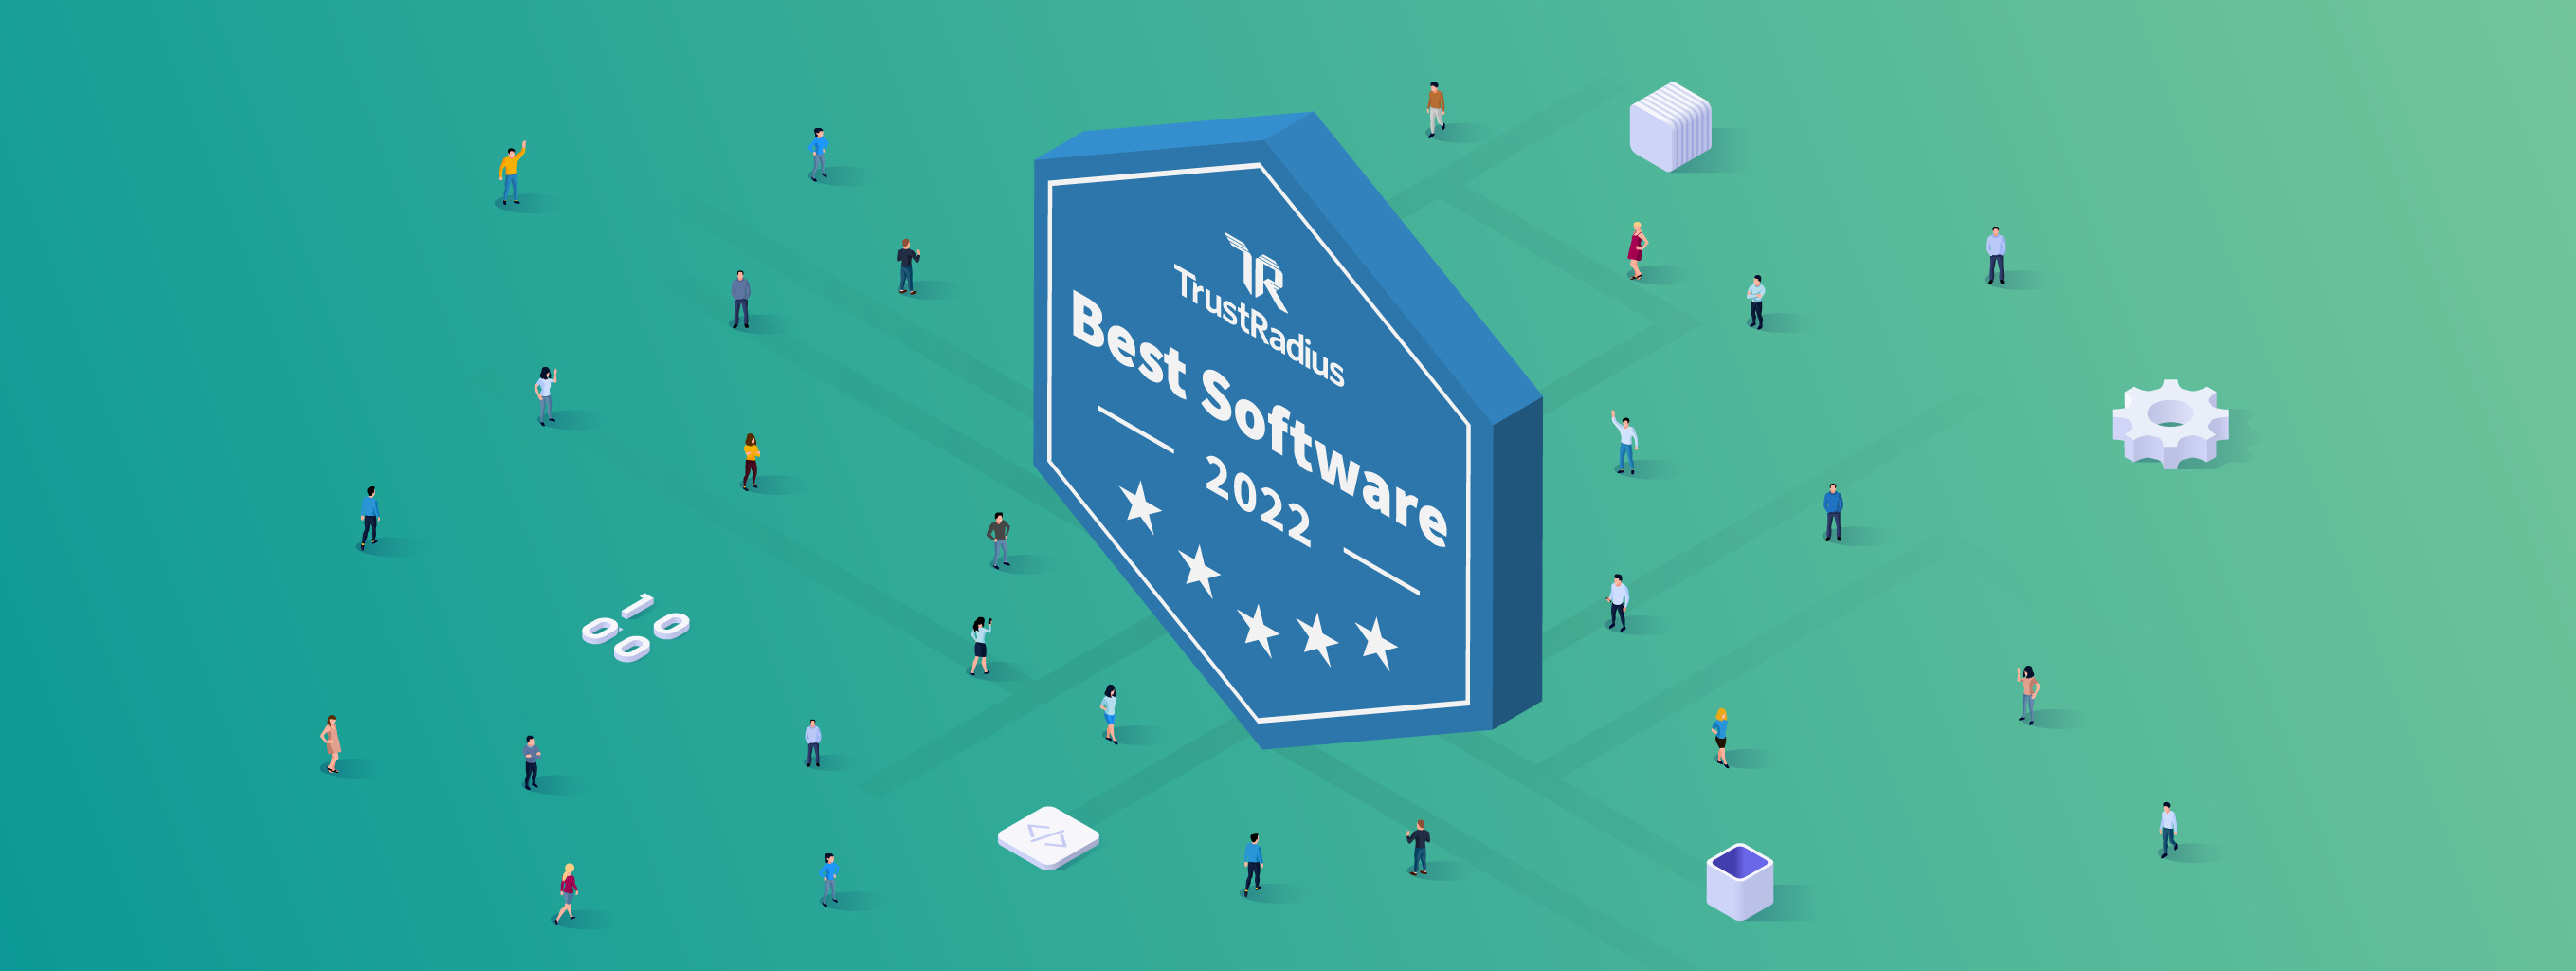 Board International recognized on the TrustRadius Best Software List